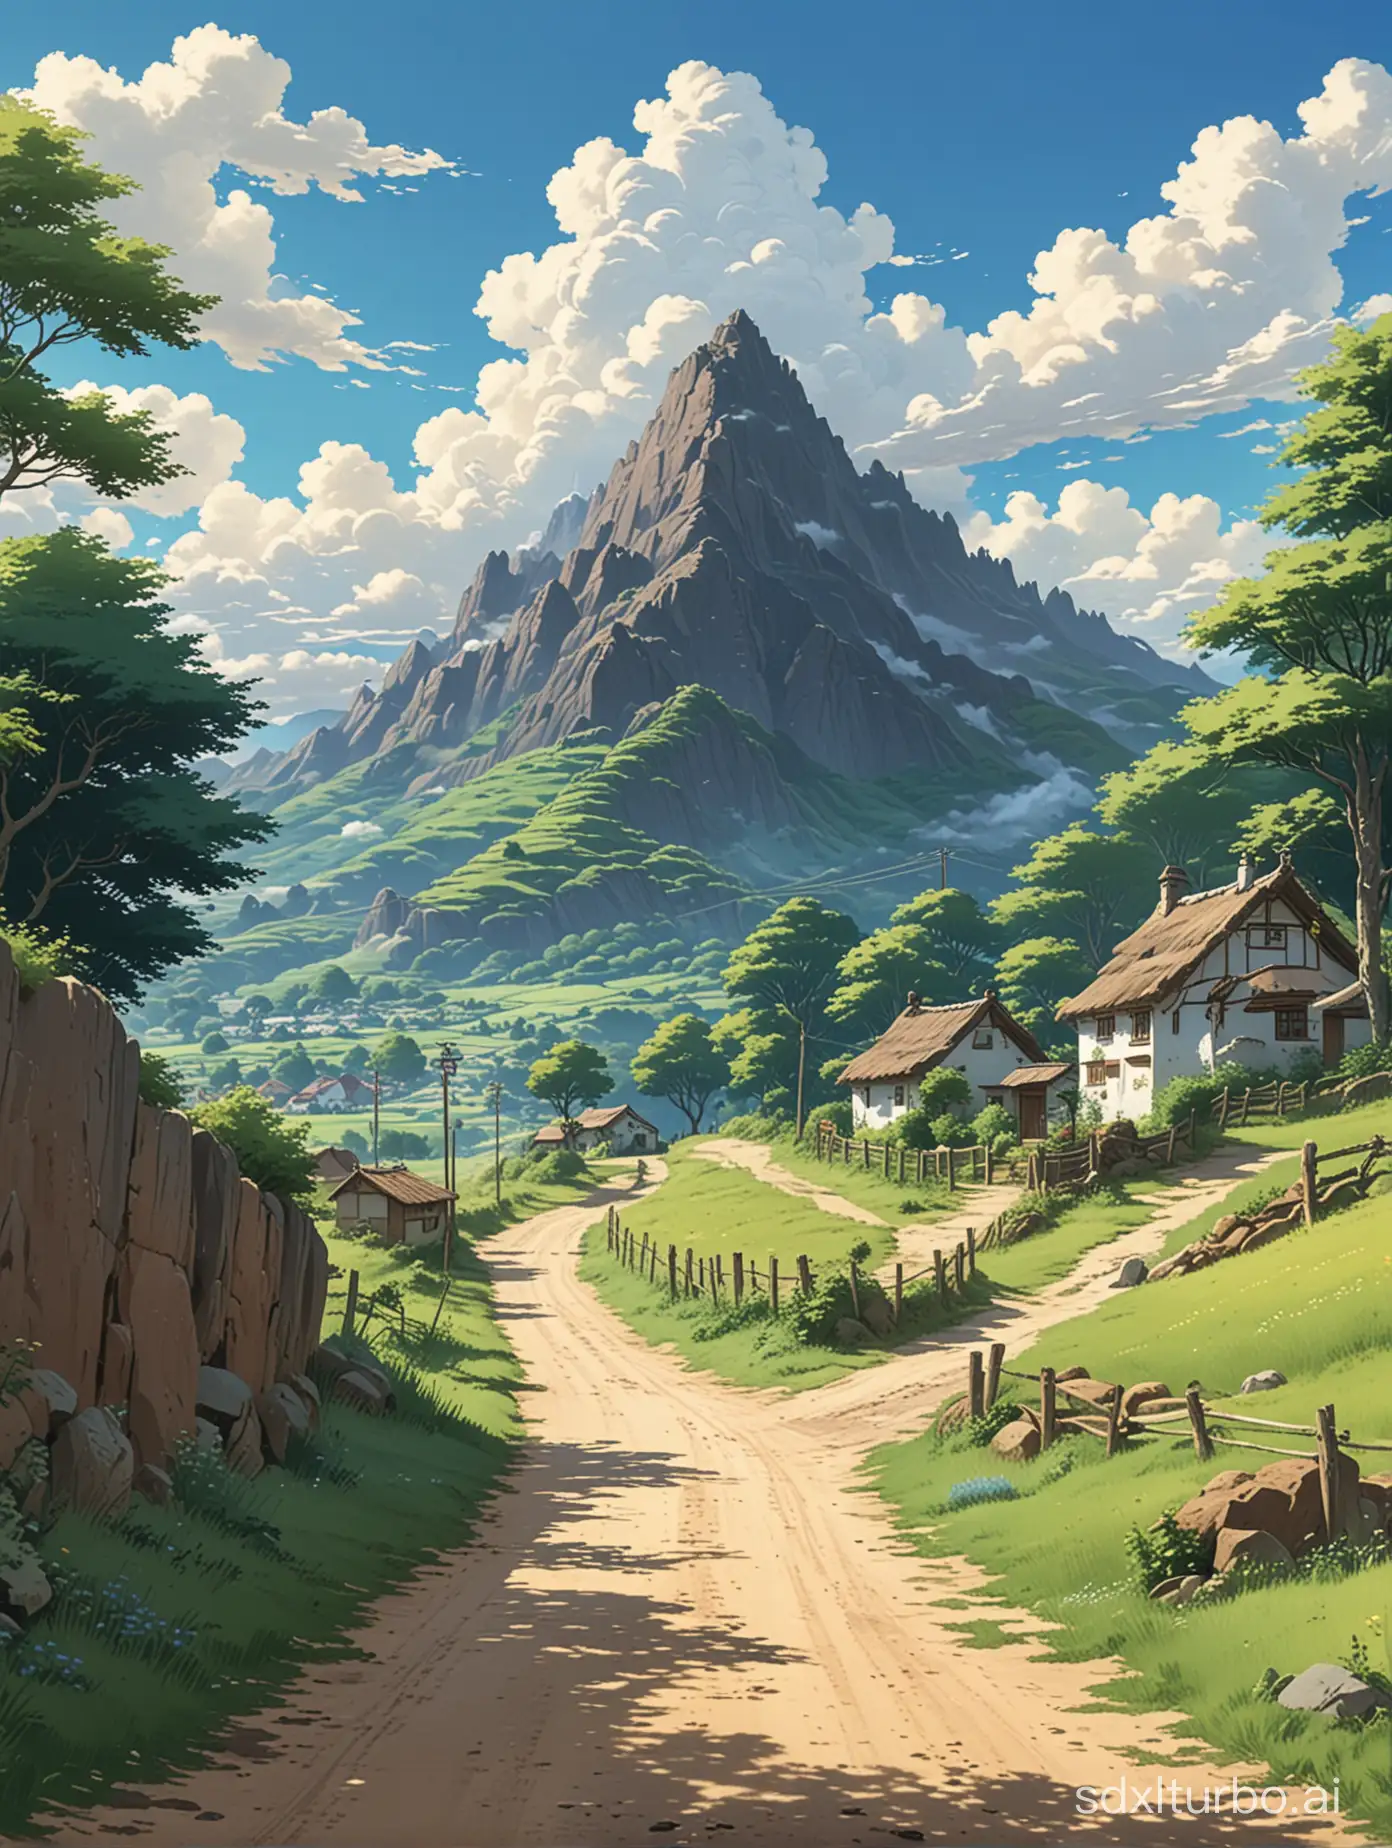 Idyllic-Village-Landscape-with-Majestic-Mountain-in-Studio-Ghibli-Anime-Style